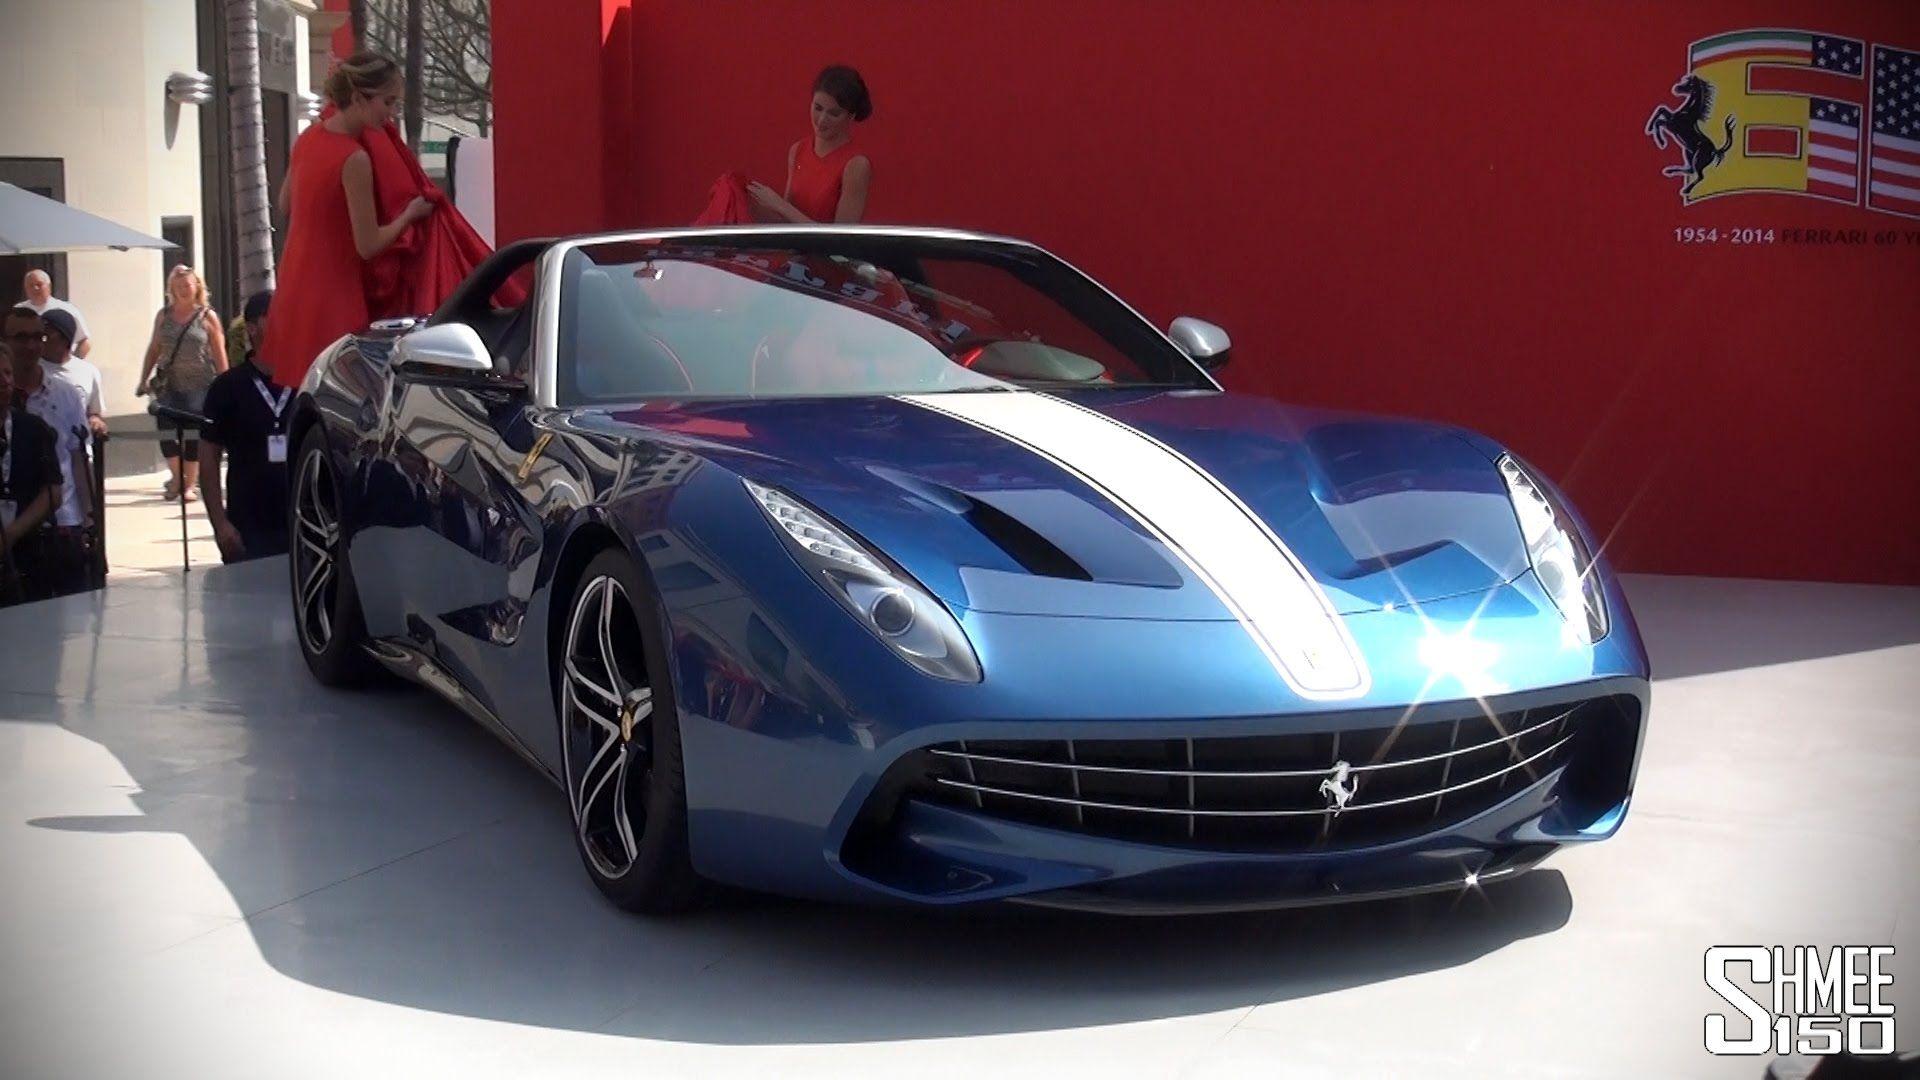 FIRST LOOK: Ferrari F60 America - $2.5m Limited to 10 Cars